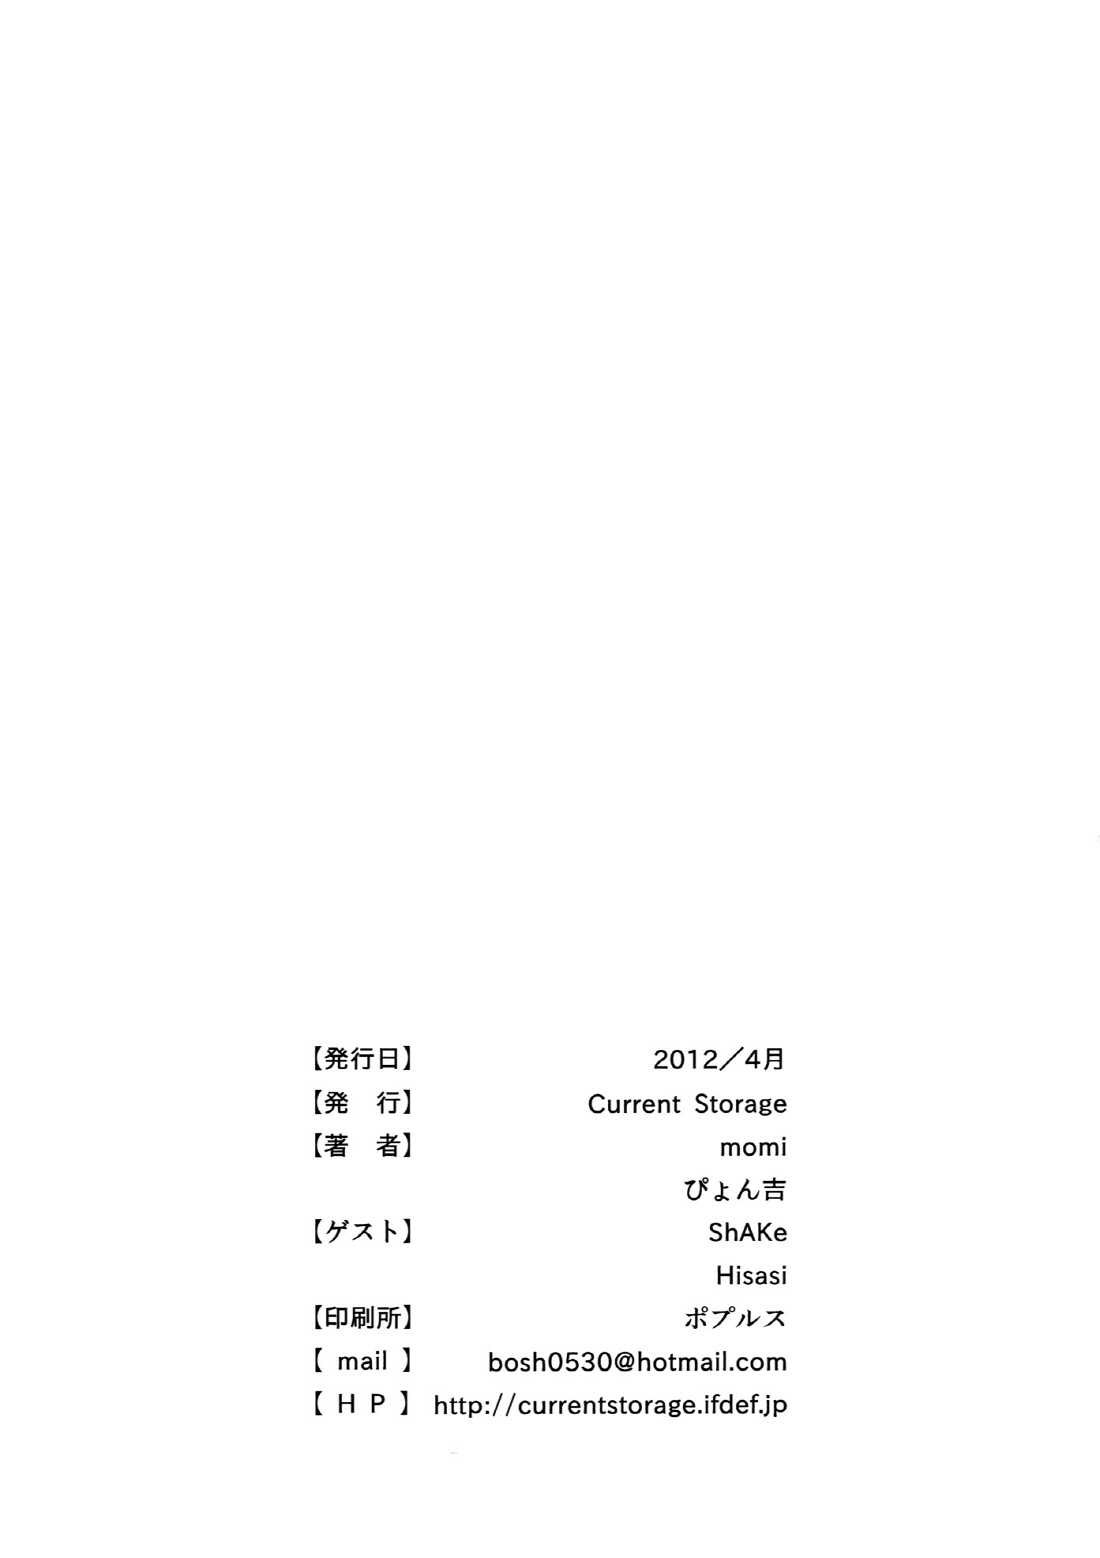 (COMIC1☆6) [Current Storage (momi, Pyon-Kti)] DHEZEALL (Original) (Korean) (COMIC1☆6) [Current Storage (momi, ぴょん吉)] DHEZEALL (オリジナル) (Korean)